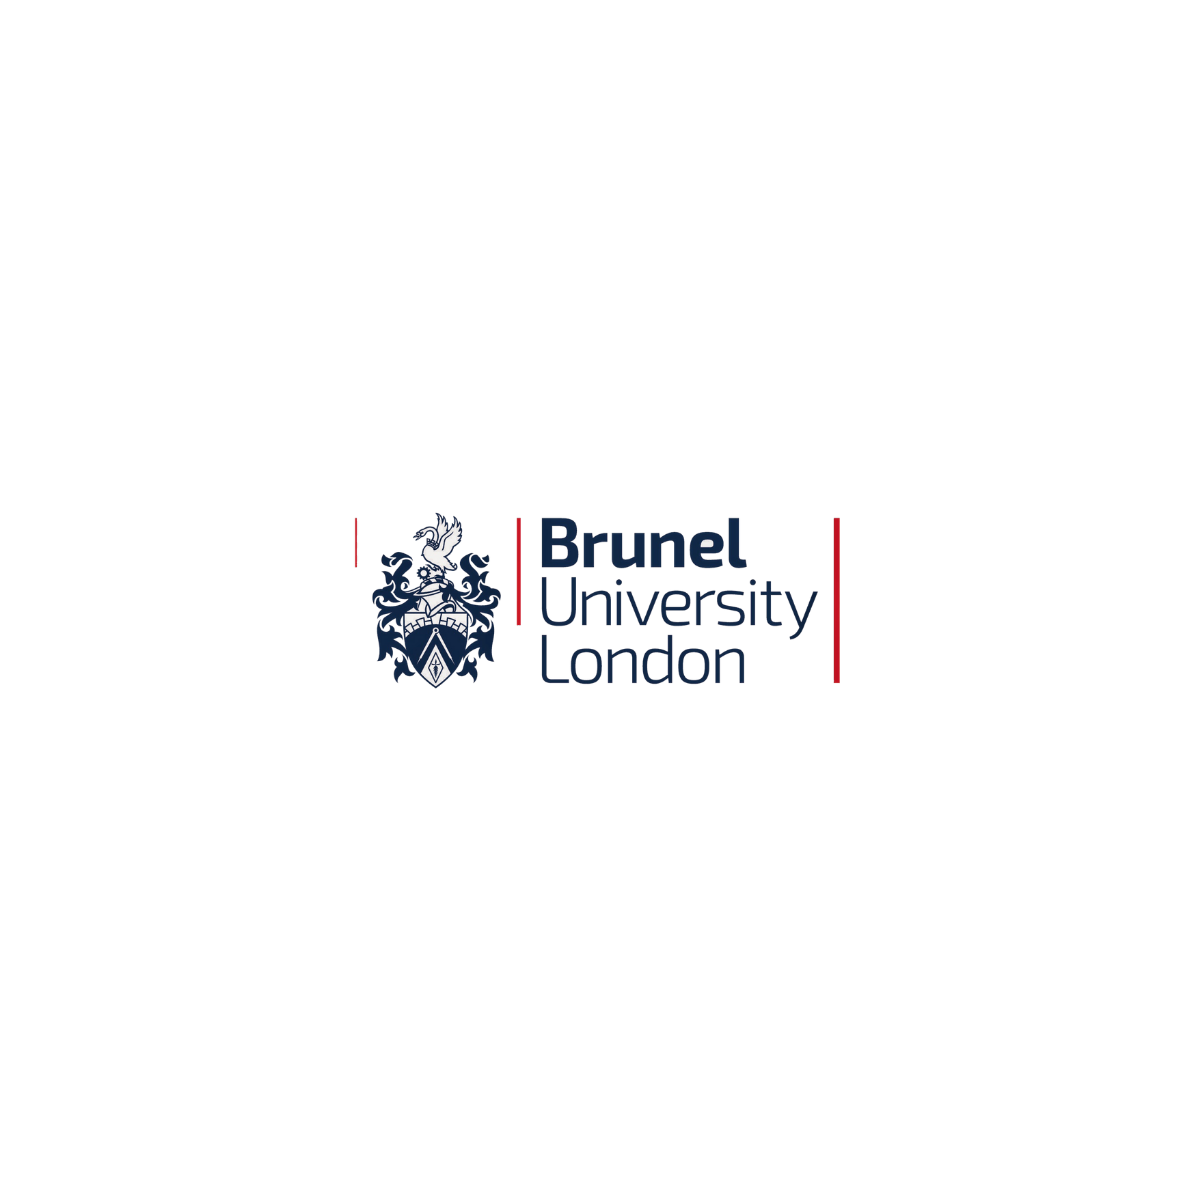 Brunel University London logo